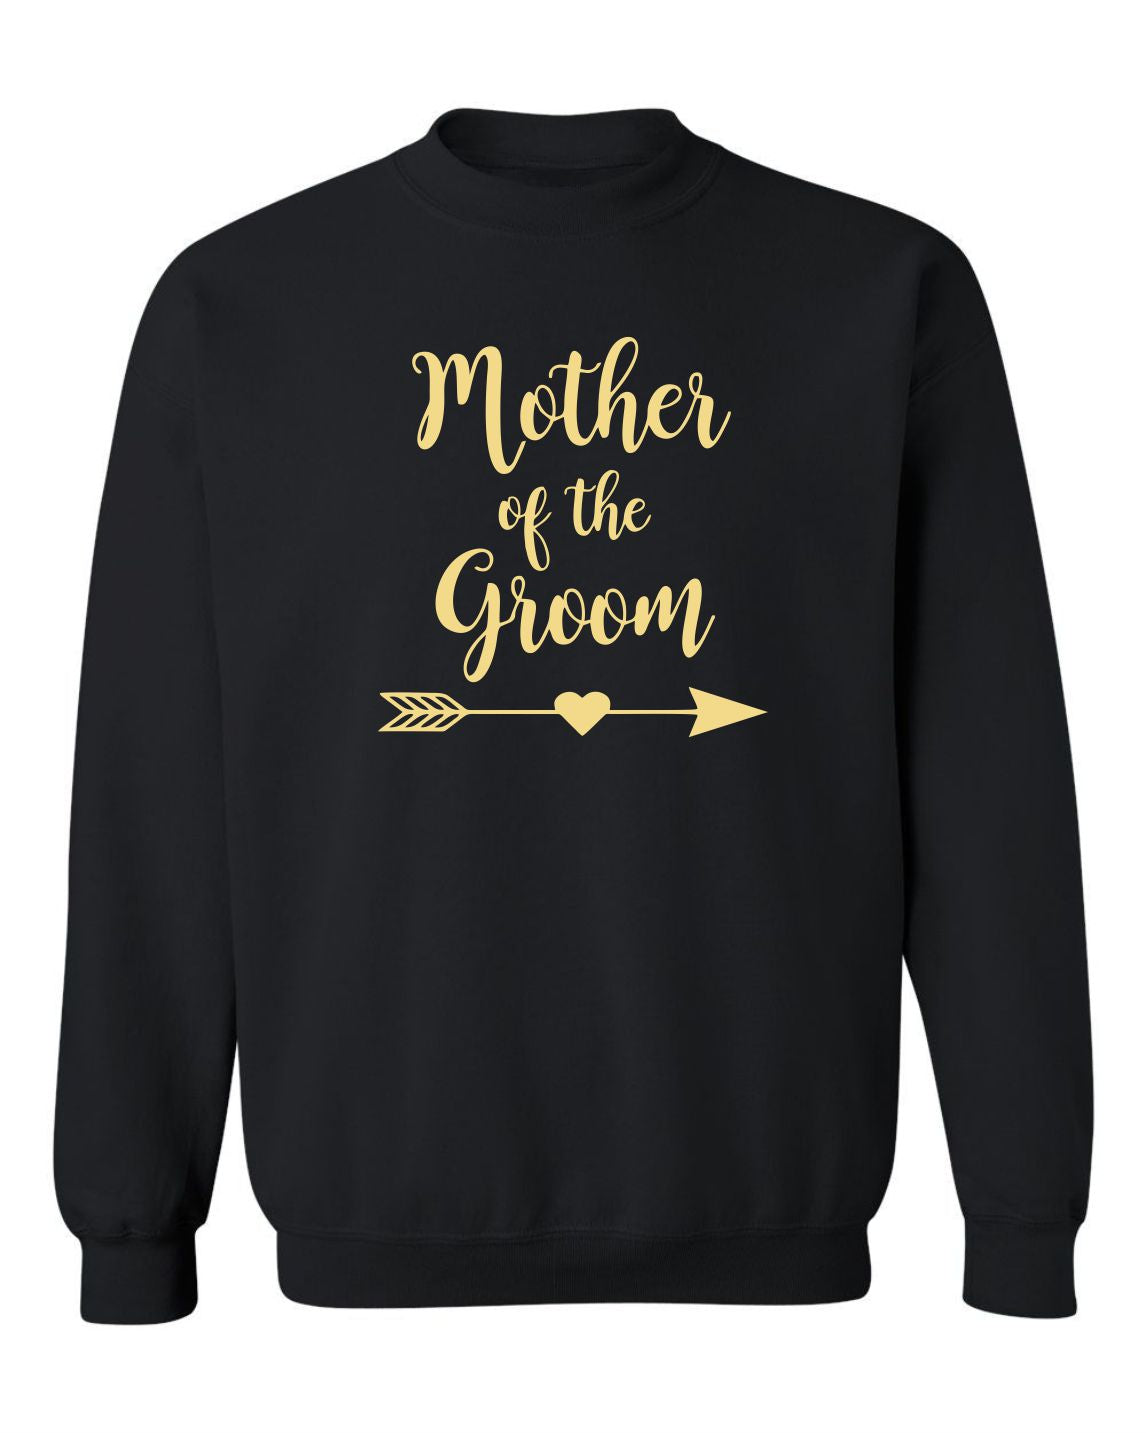 "Mother Of The Groom" (Arrow Heart Design) Unisex Crewneck